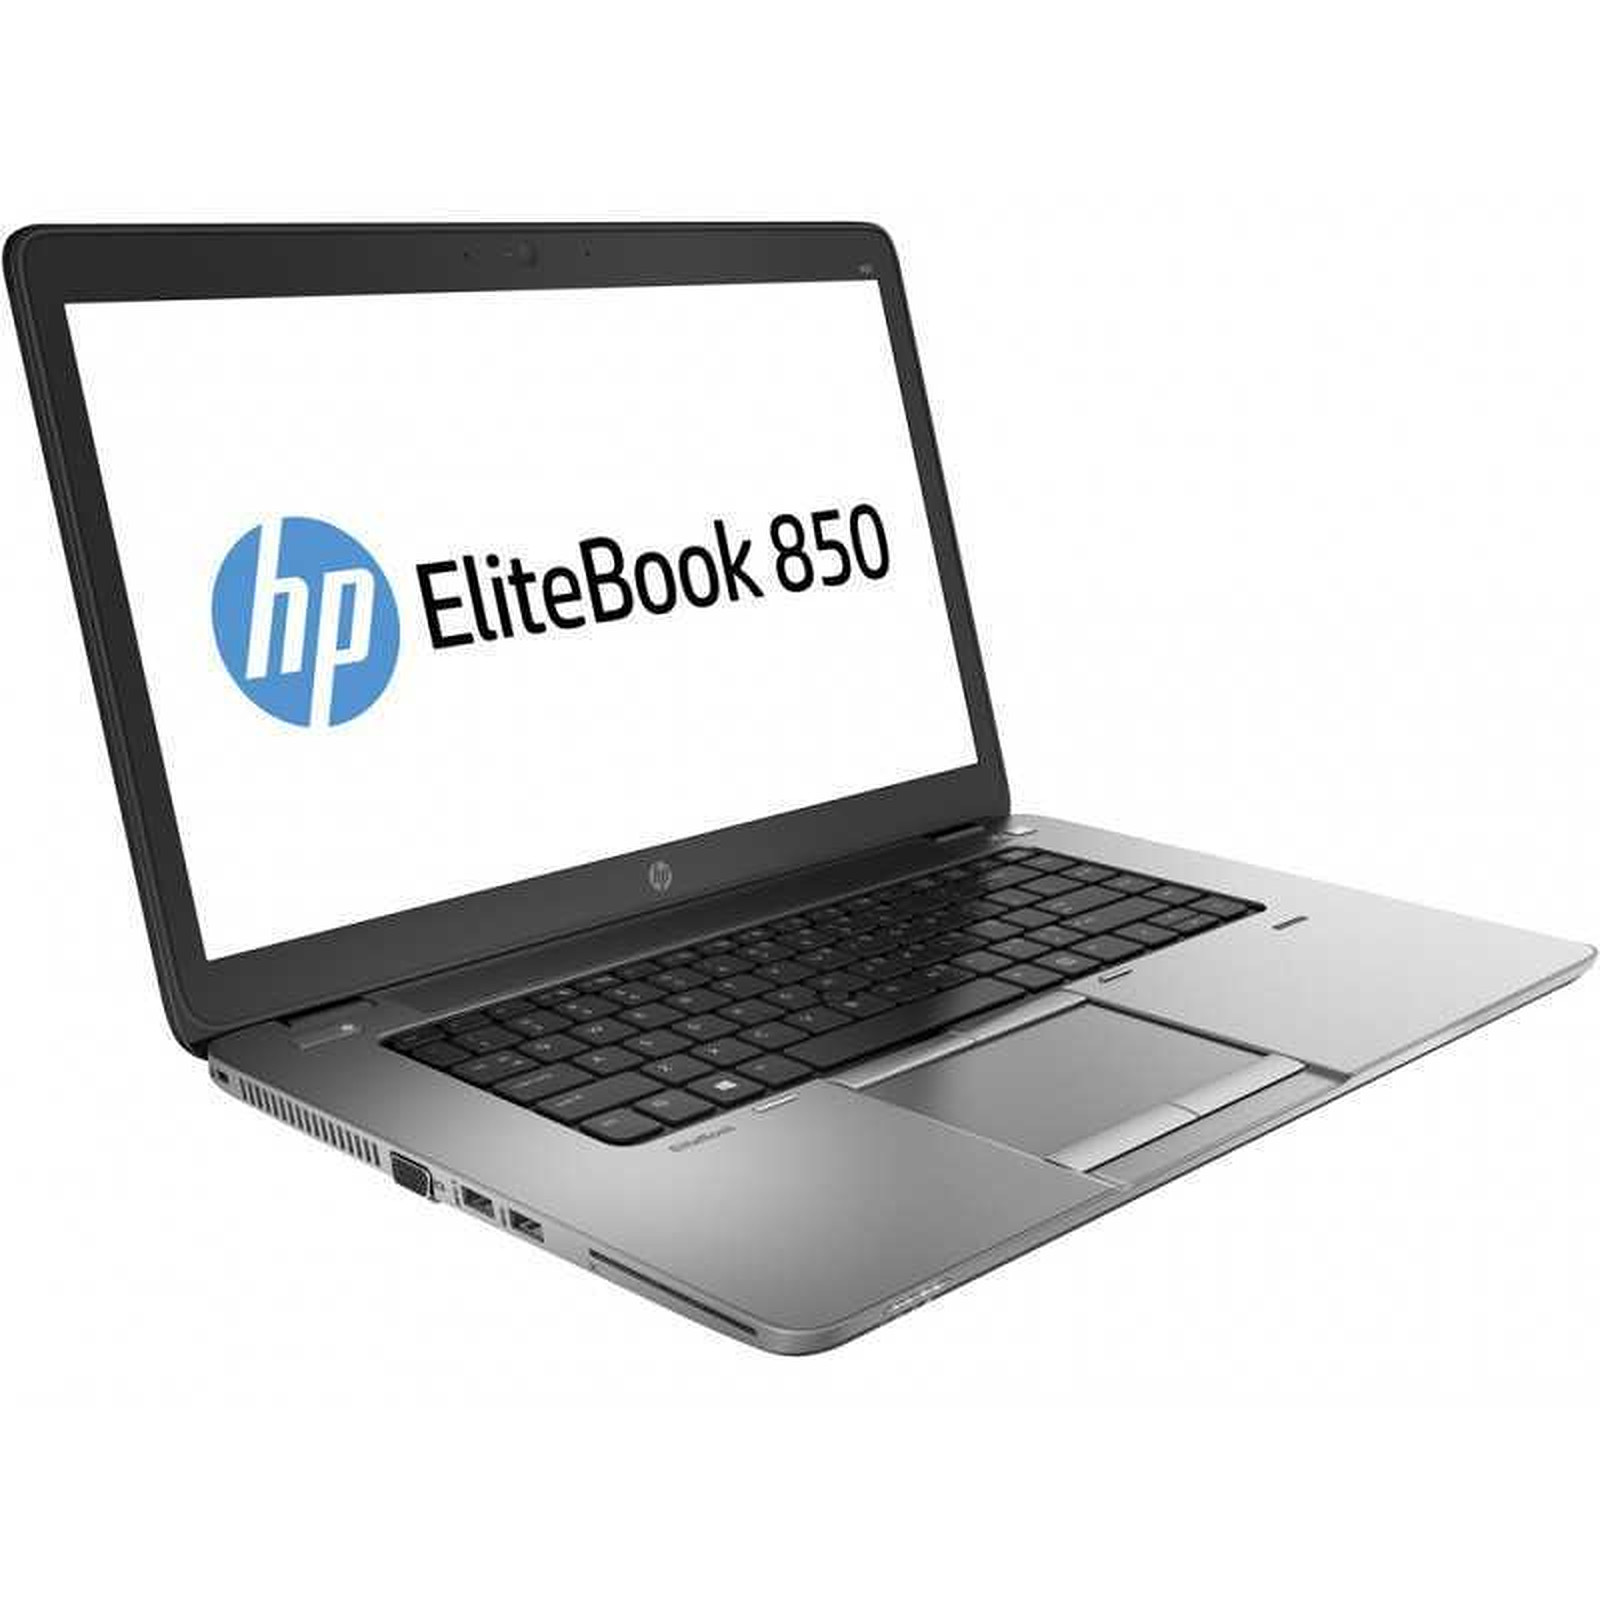 HP EliteBook 850 G2 (G8T23AV-B-6974) · Reconditionne - PC portable reconditionne HP